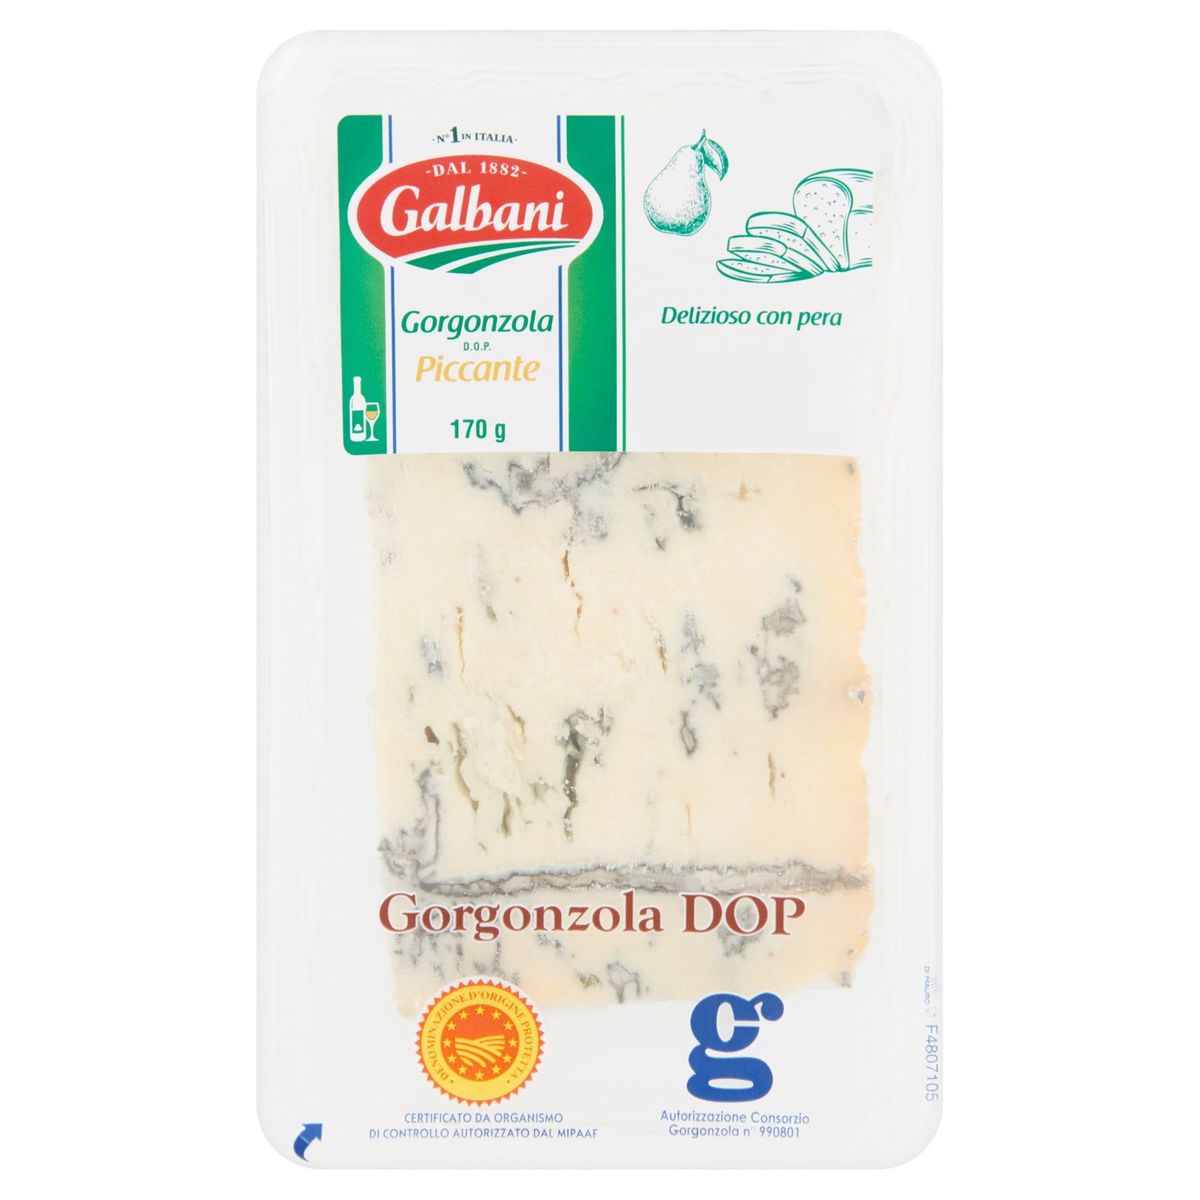 Galbani Gorgonzola D.O.P. Piccante 170 g